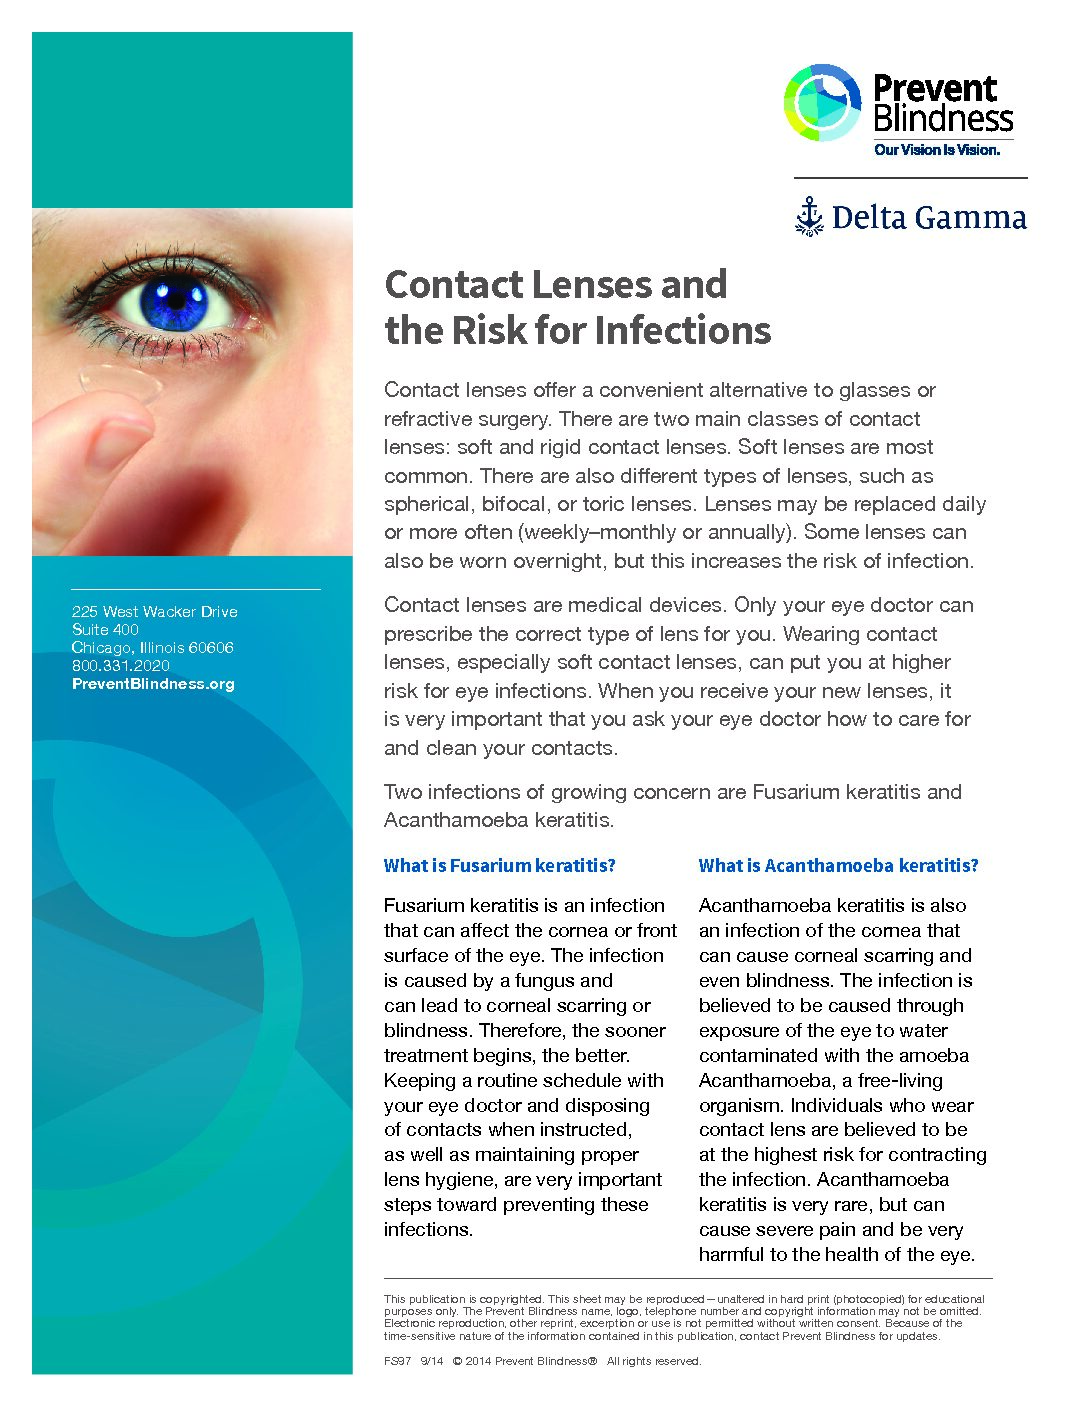 Contact Lens Safety – Delta Gamma